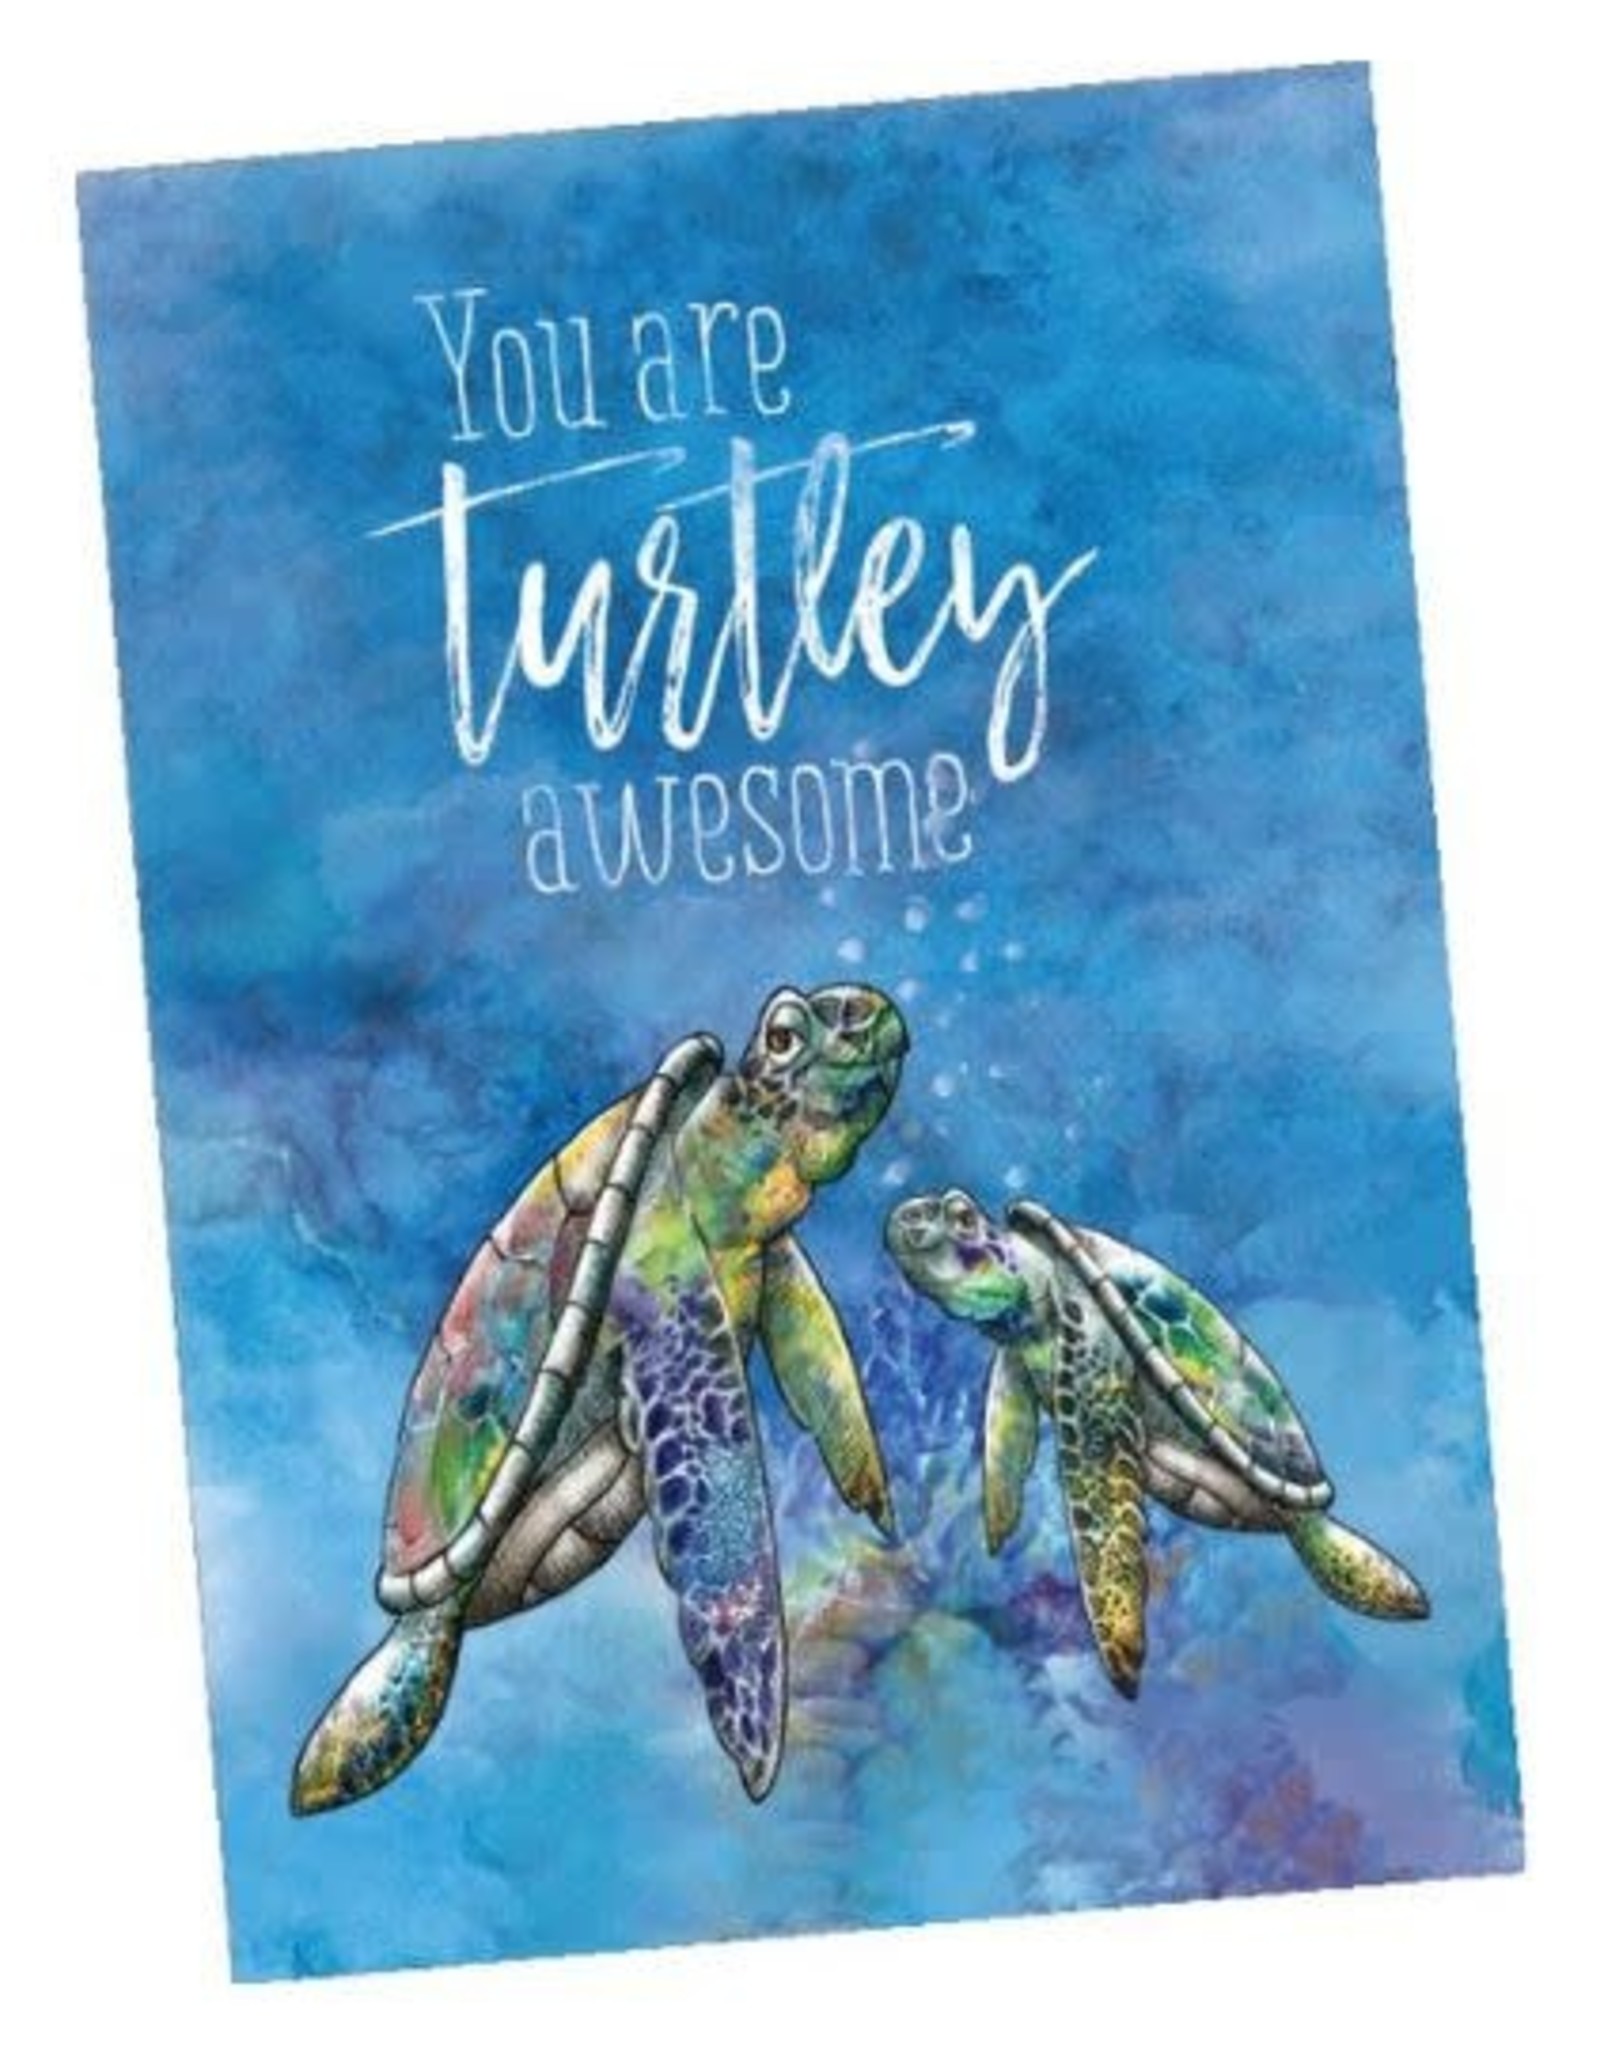 Tree - Free Greetings Turtley Awesome Greeting Card